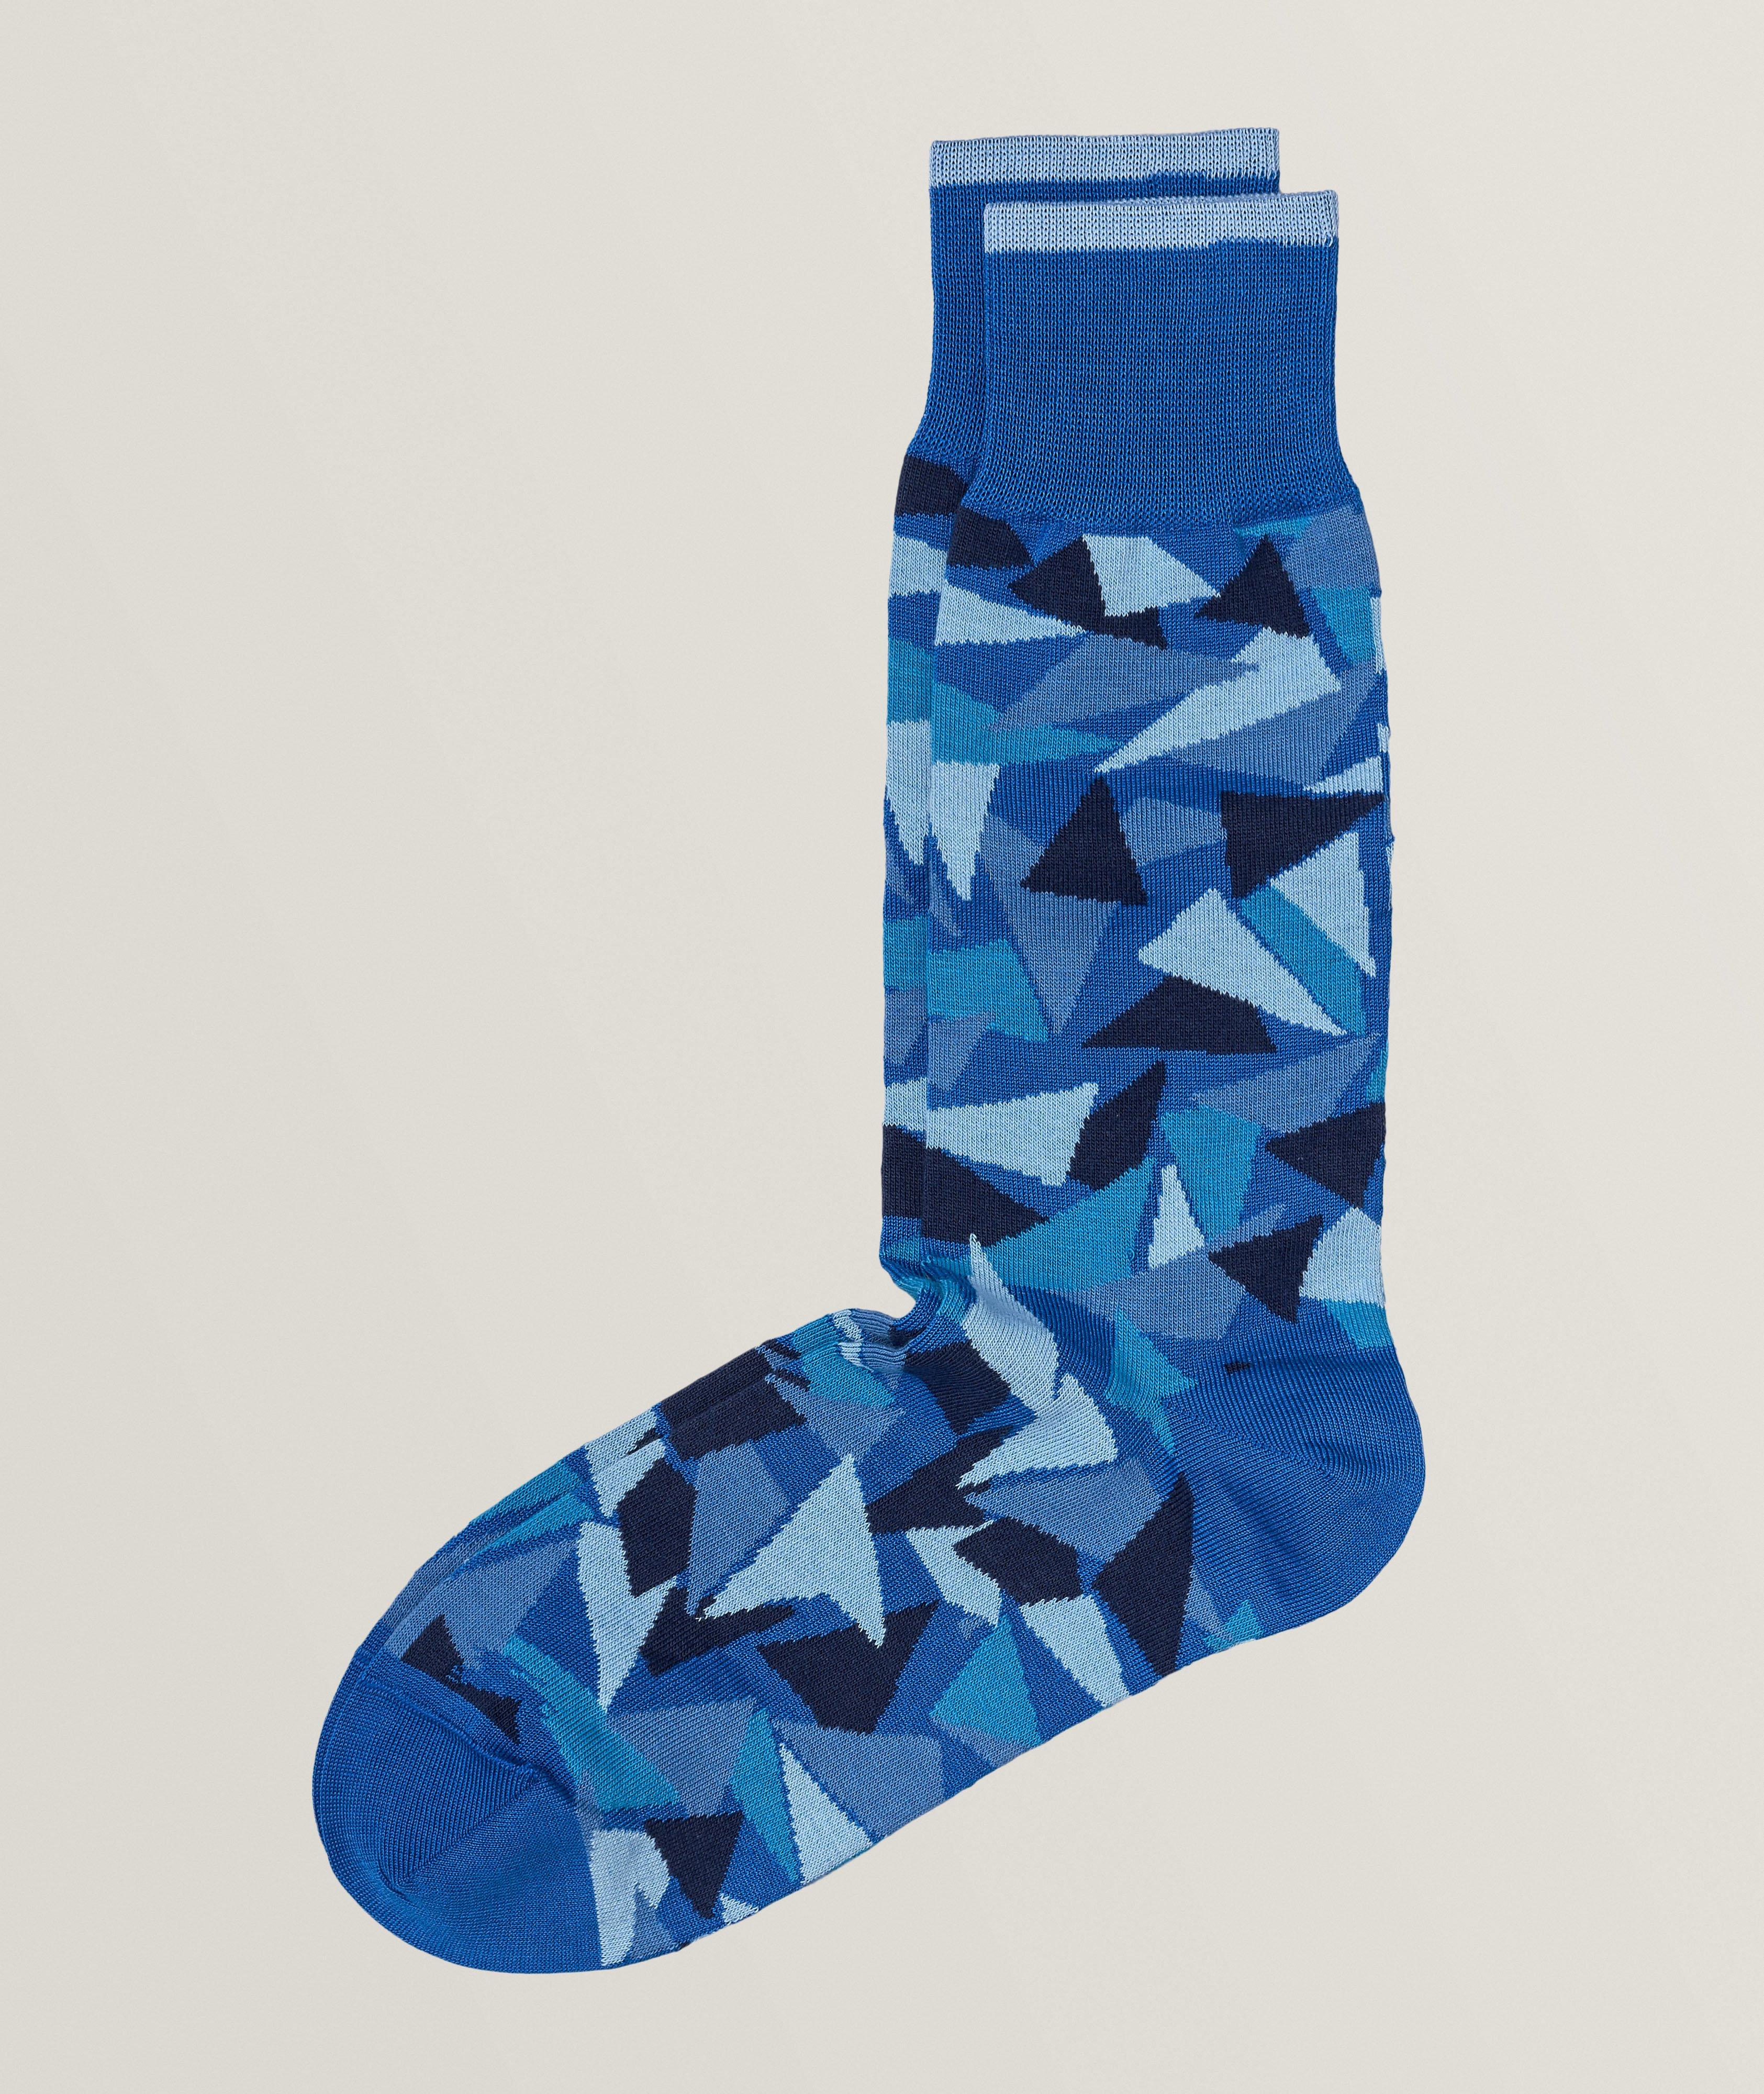 Trinagle-Geometric Mercerised Cotton-Blend Dress Socks image 0